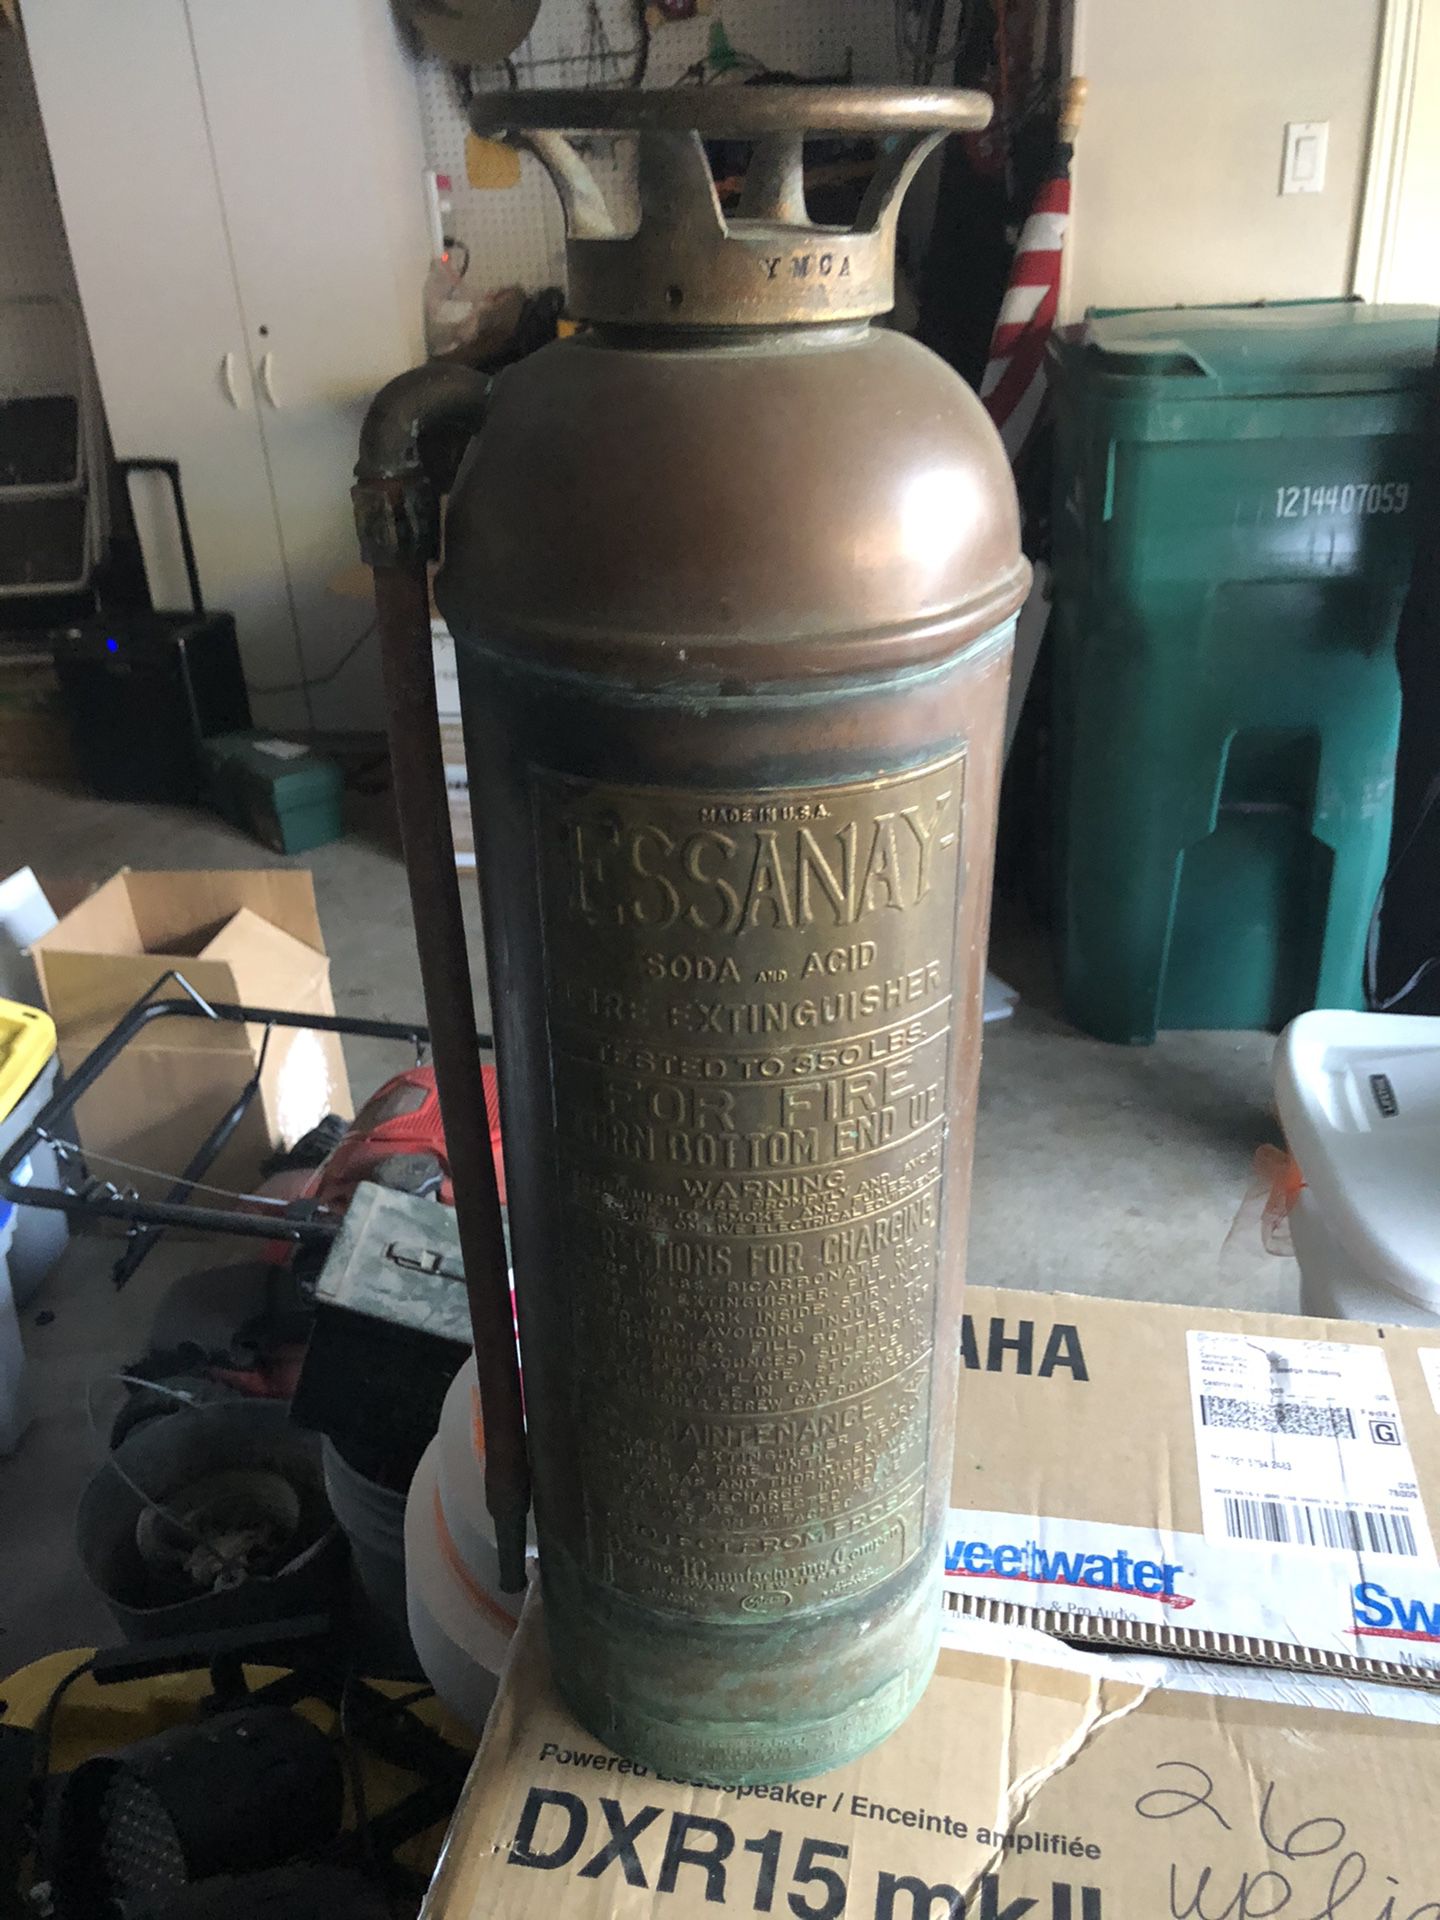 Vintage Fire Extinguisher (Essanay Brand)